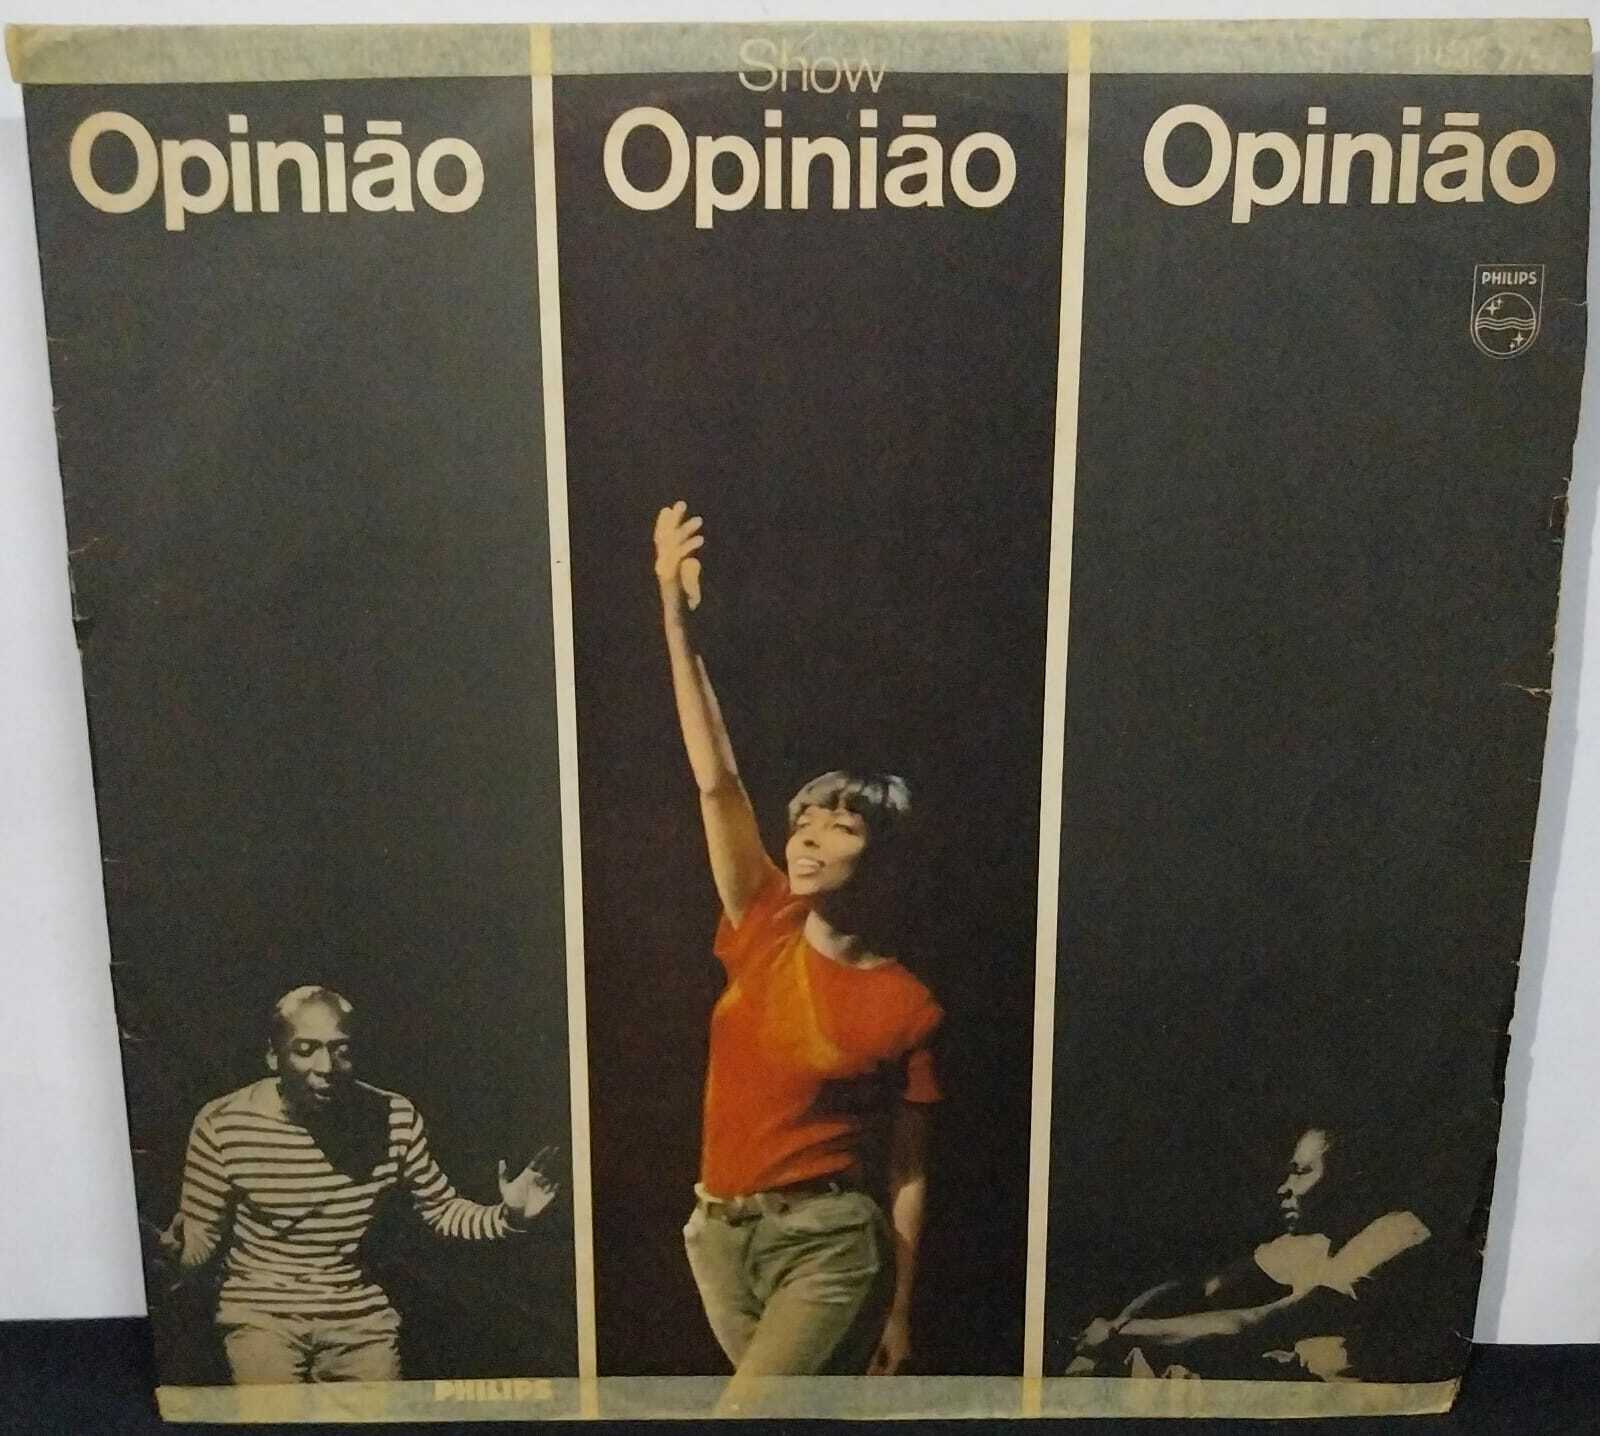 Vinil - Nara Leão, Zé Keti, João Do Vale e Grupo Opiniao - Show Opiniao